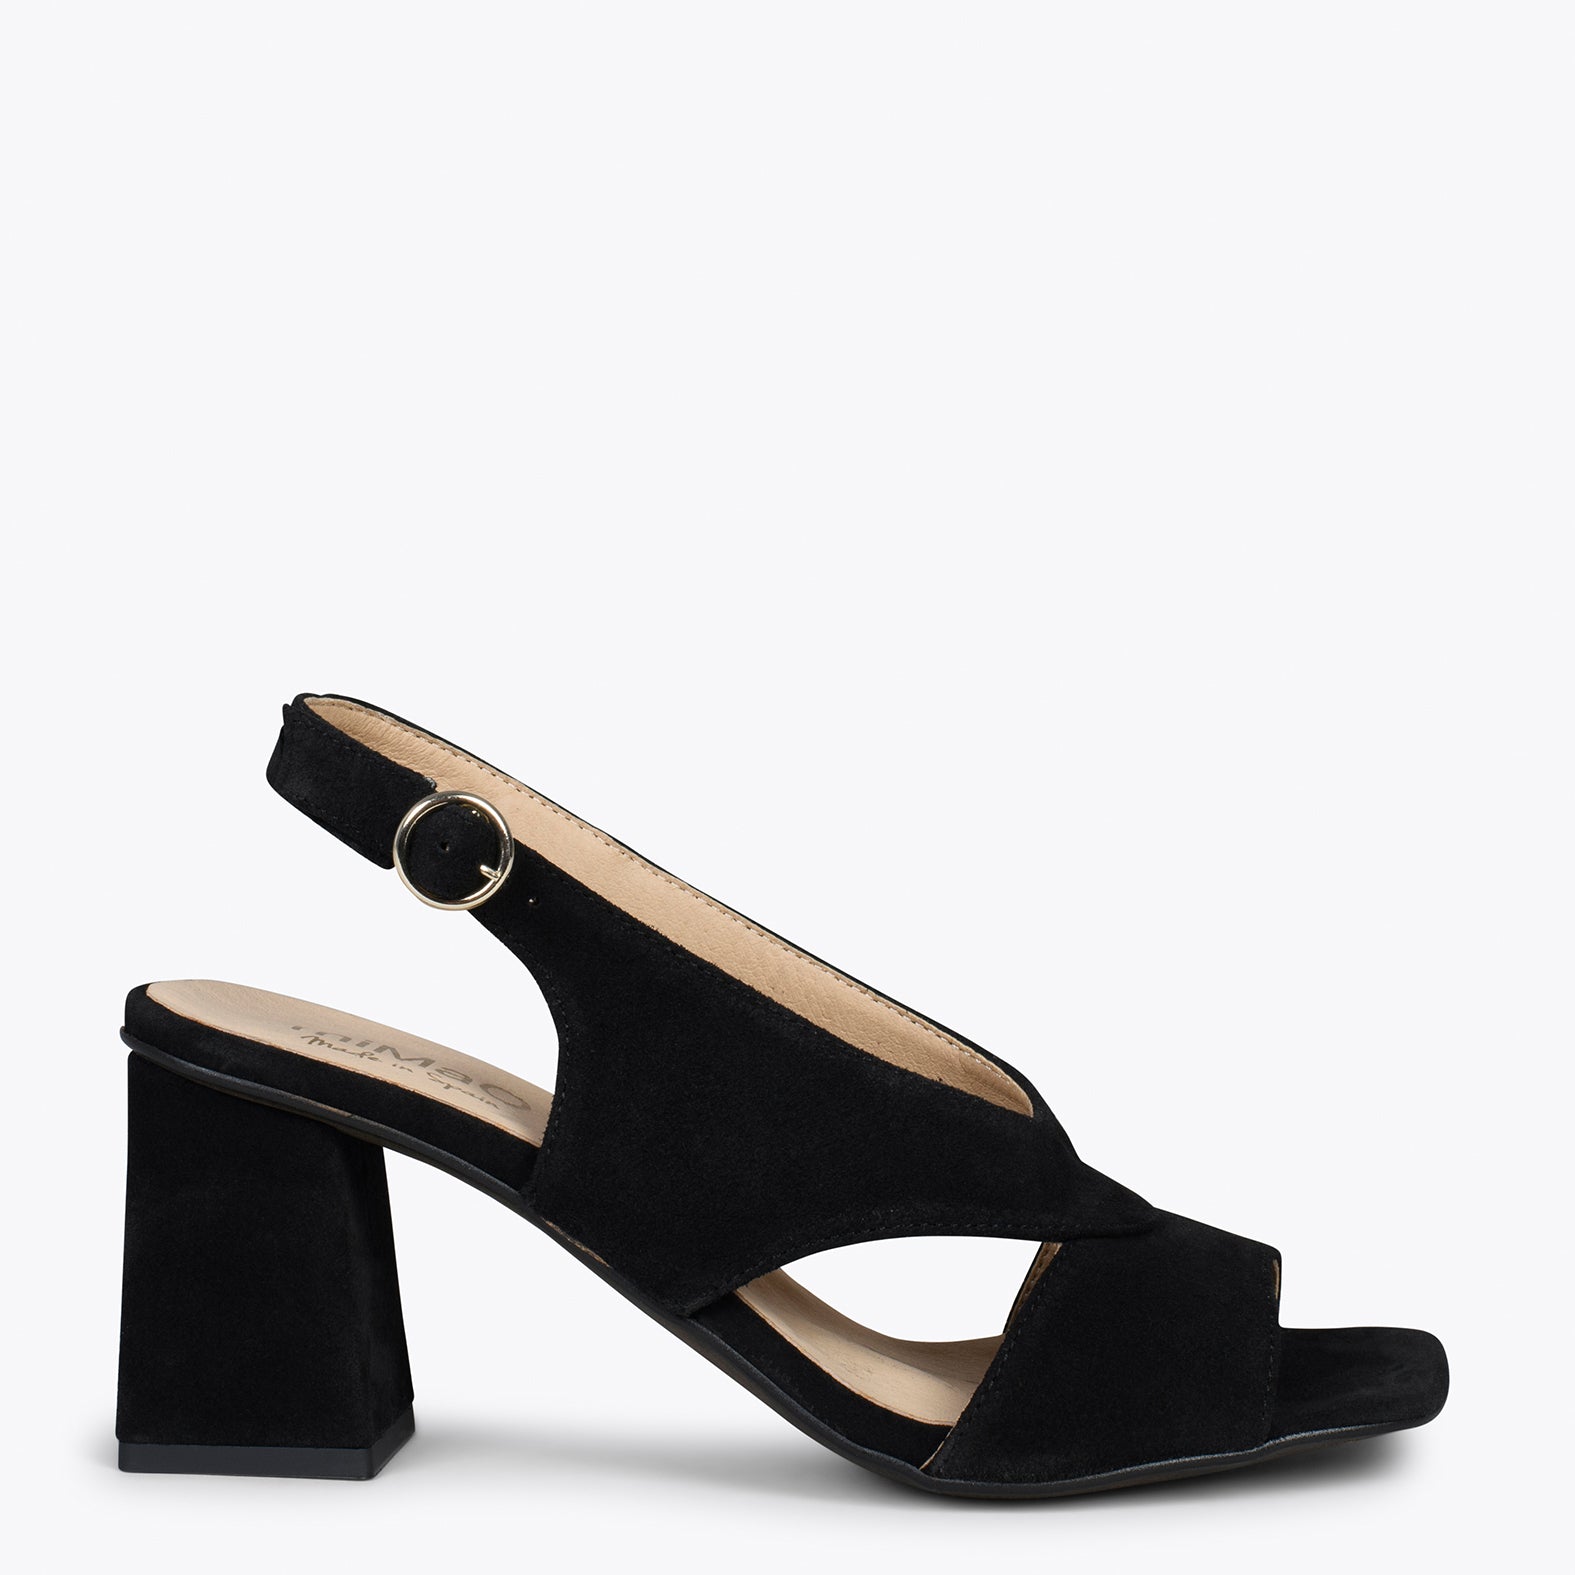 BLOCK – BLACK sling-back sandals with block heel